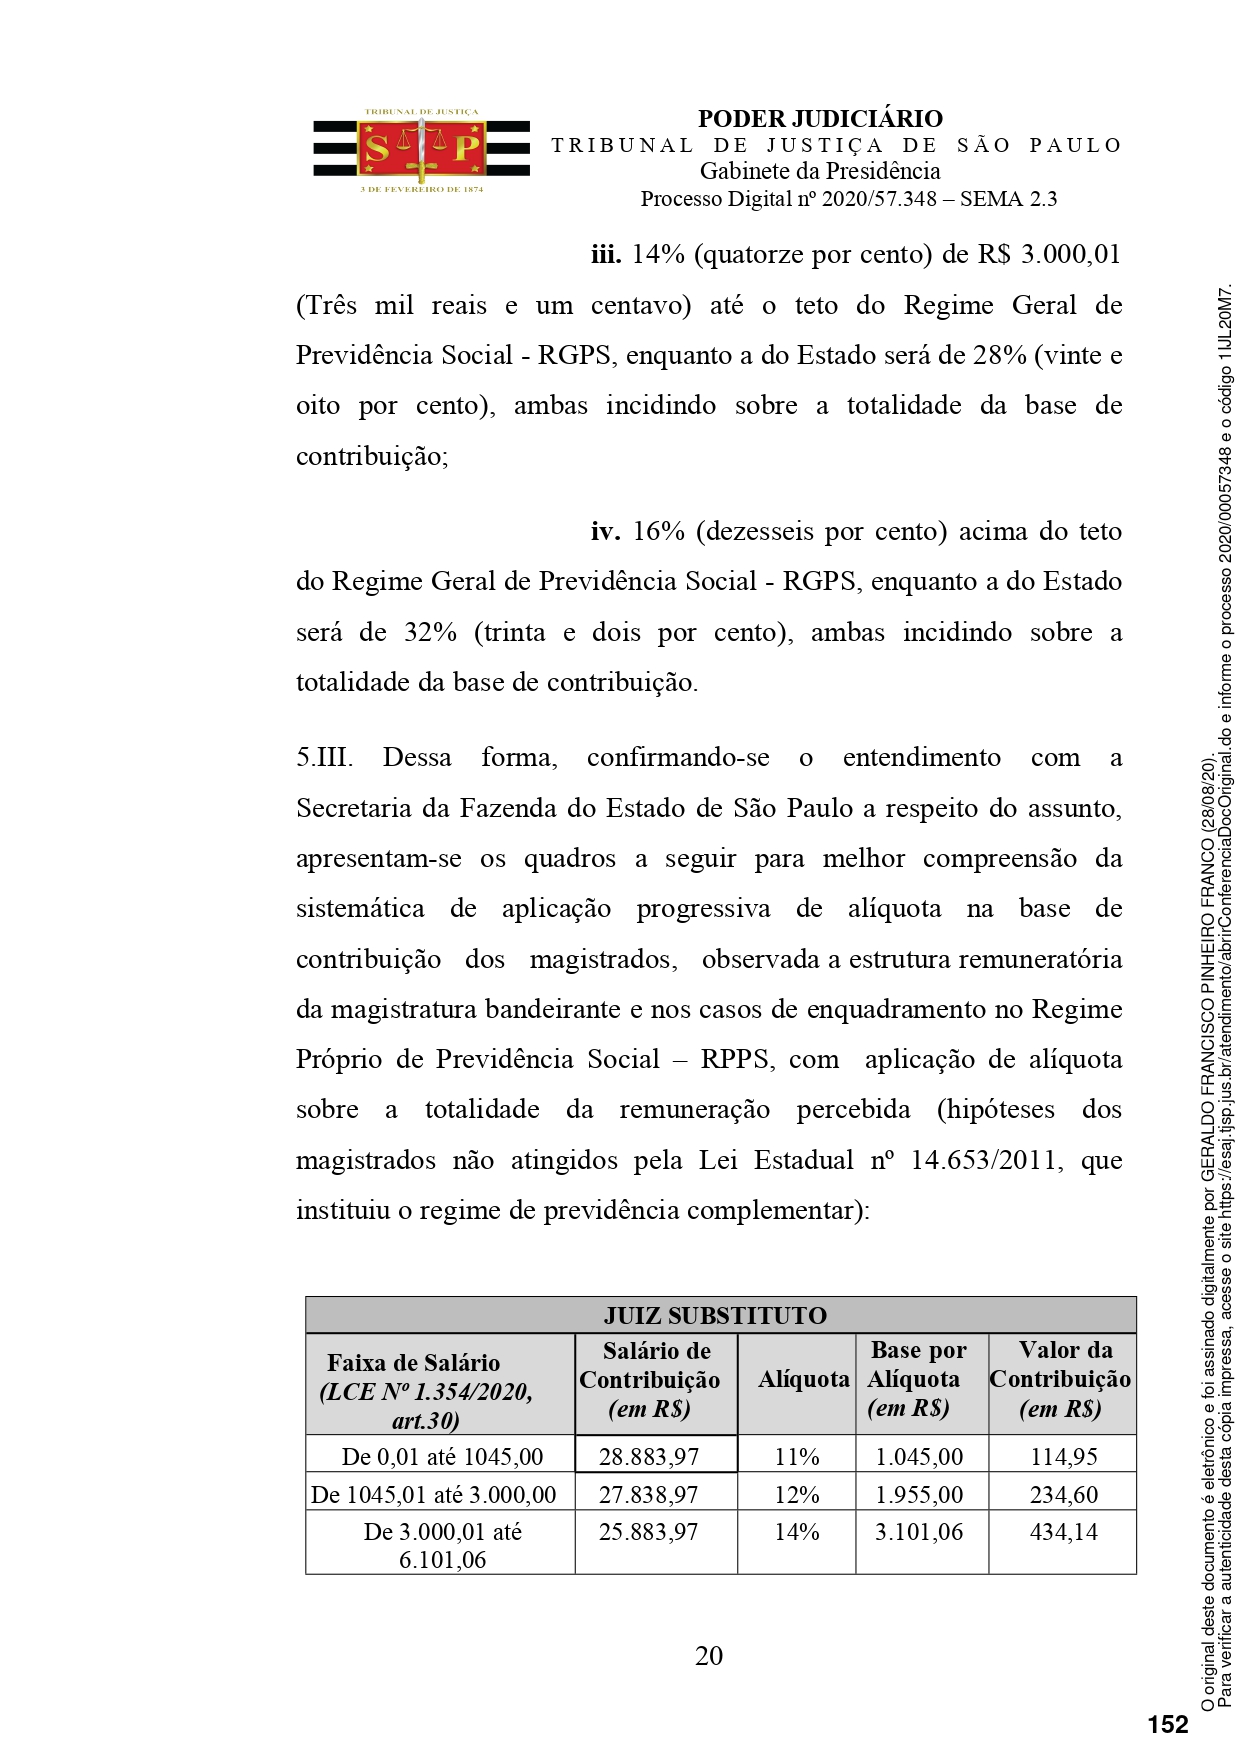 reforma-previdencia-tj-sp_page-0020.jpg